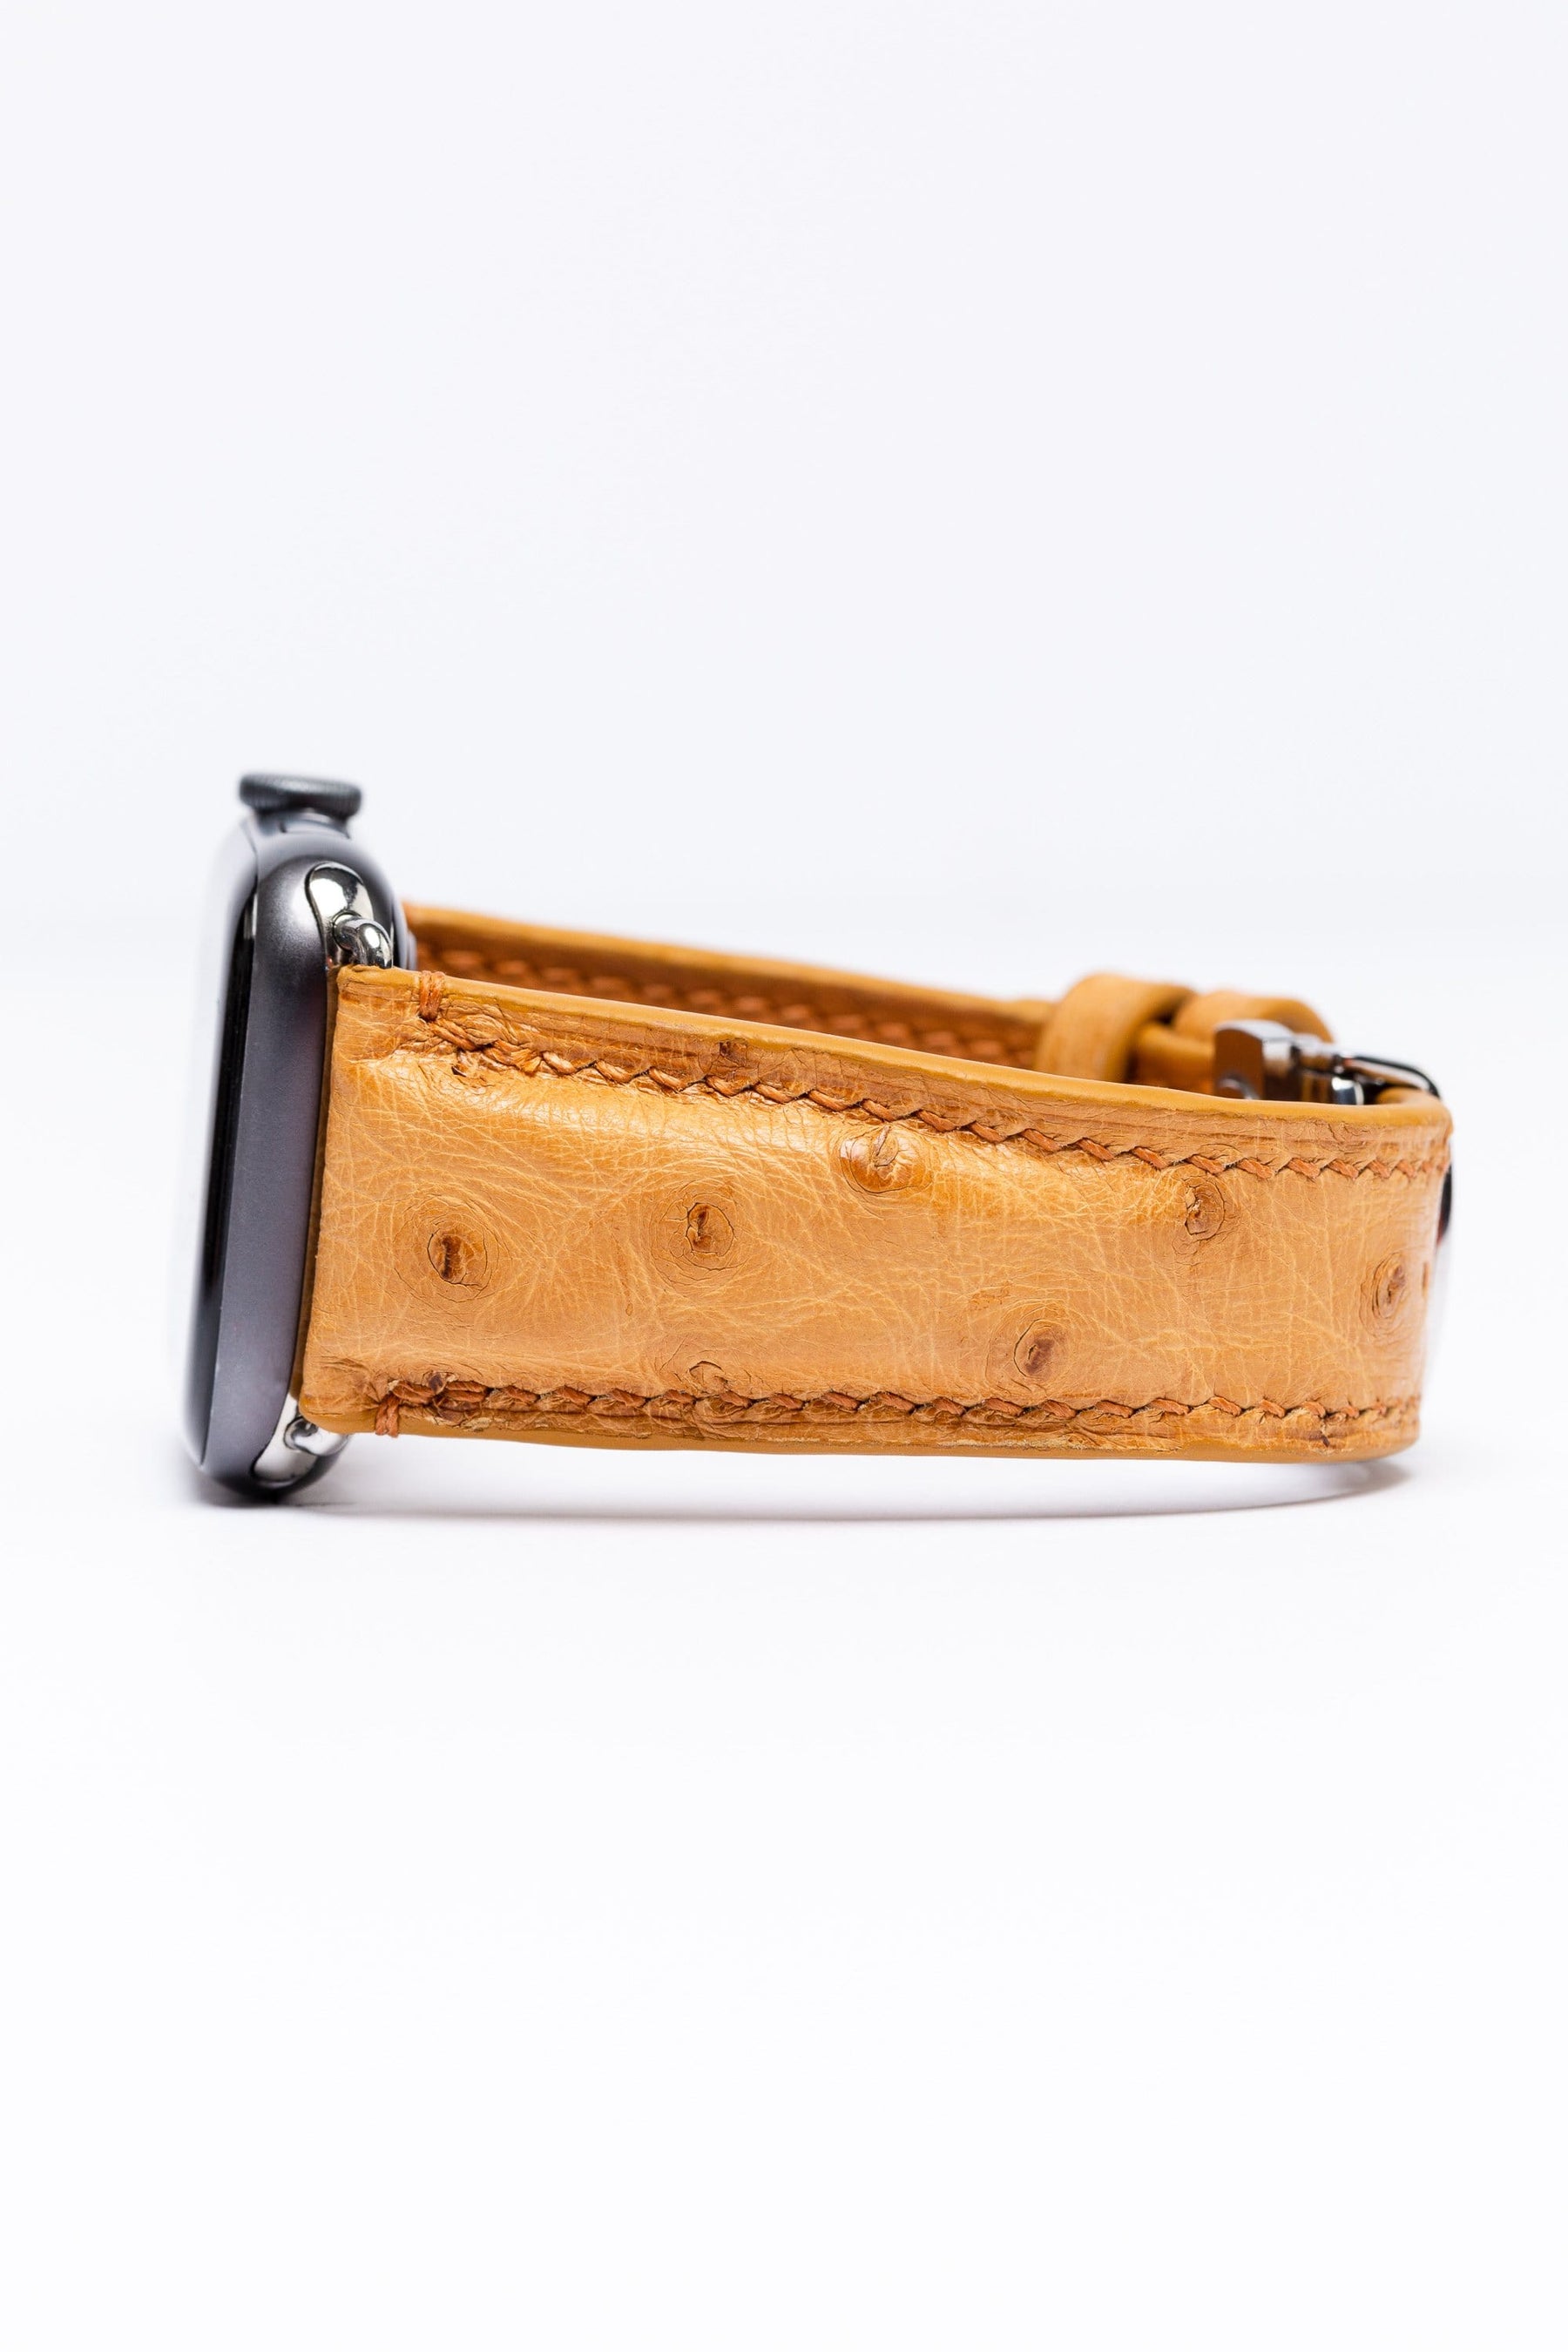 Tamagini Leather  Luxury Apple Watch Strap 44mm Denim Blue Osrtich | Tamagini Leather